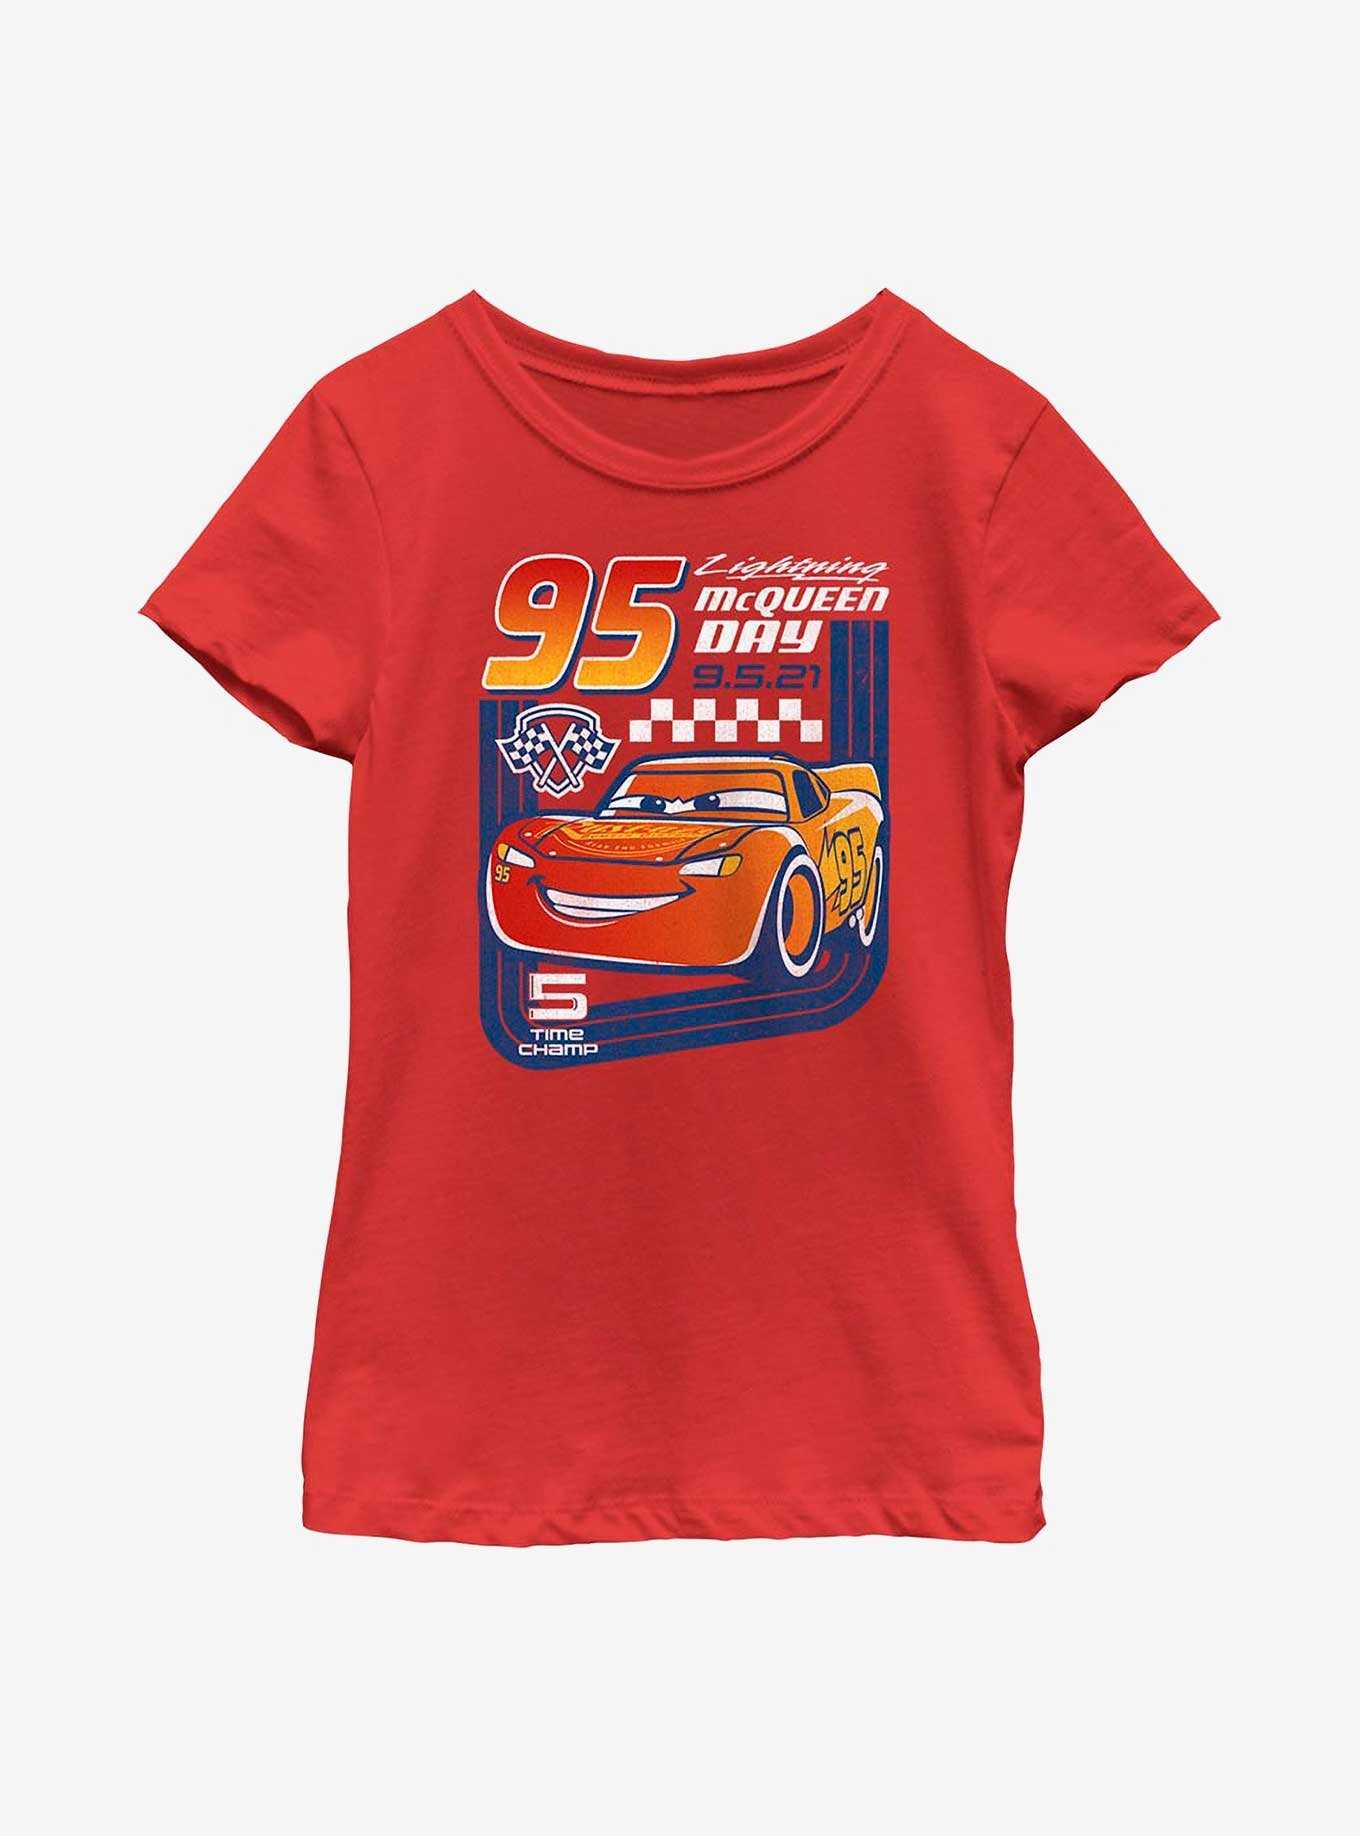 Disney Pixar Cars 95 McQueen Day Youth Girls T-Shirt, , hi-res